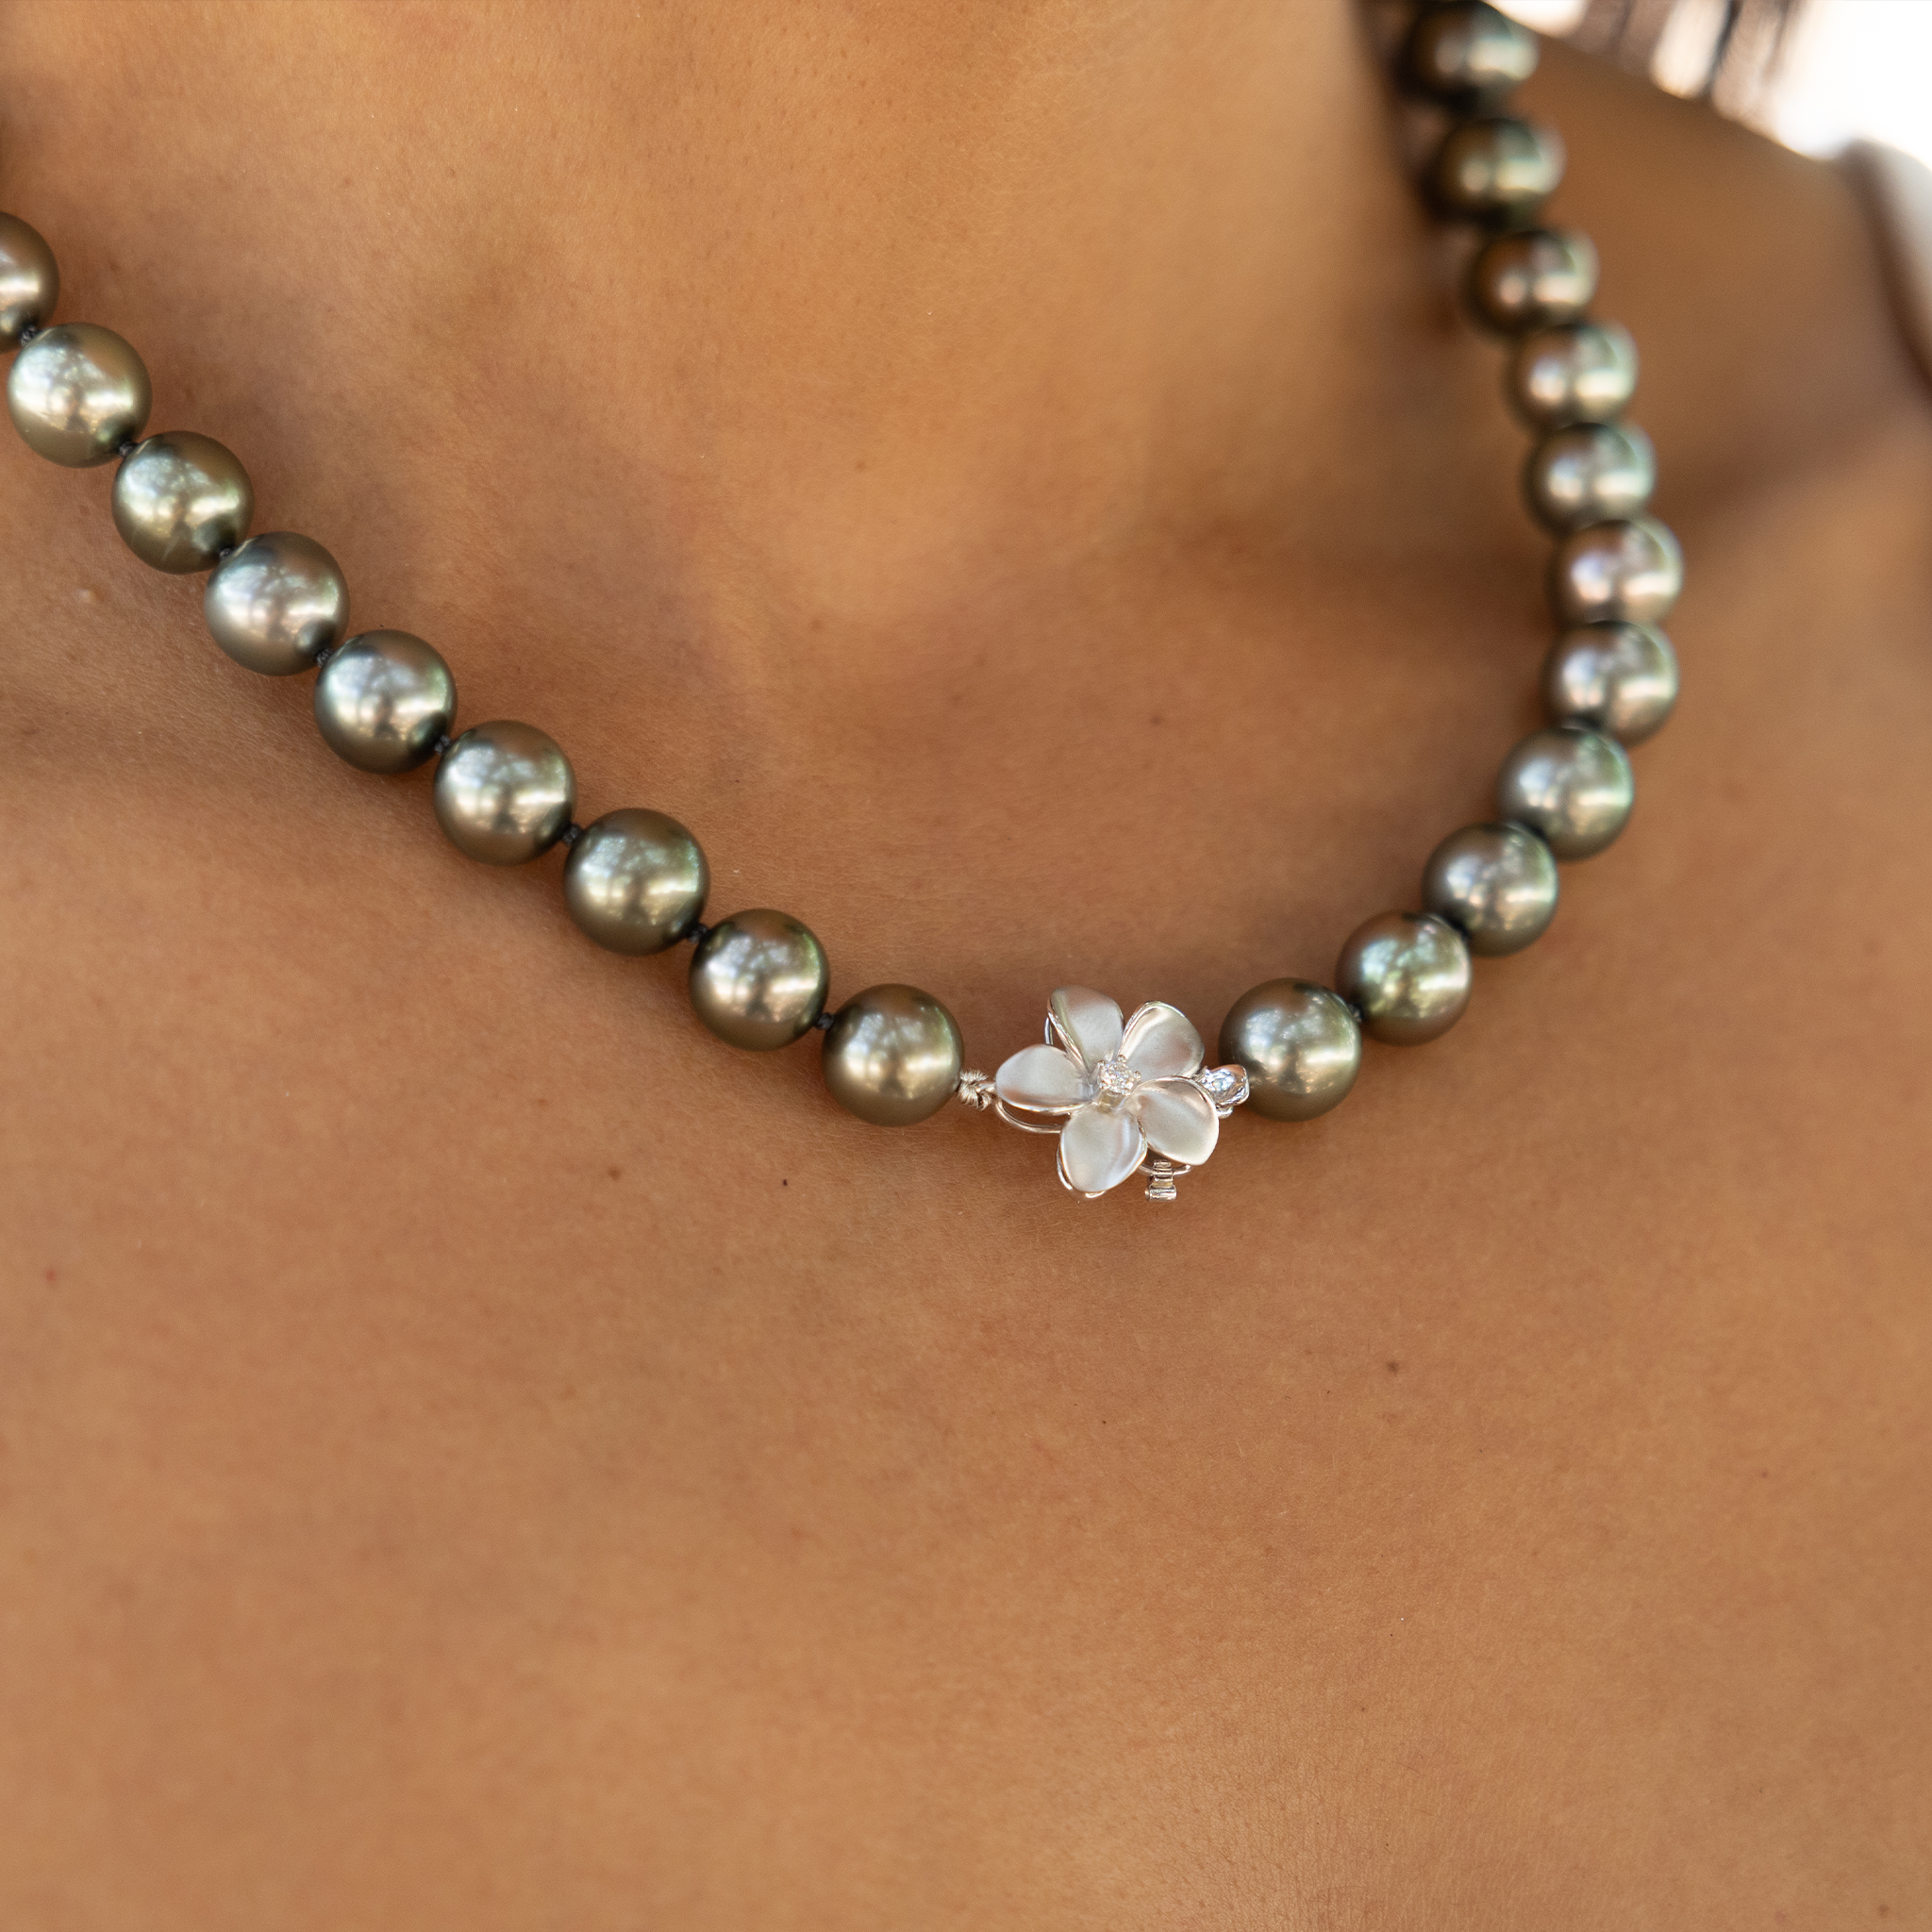 18-19 "brin de perle noir tahitien avec un fermoir de plumeria en diamant en or blanc - 10-11 mm